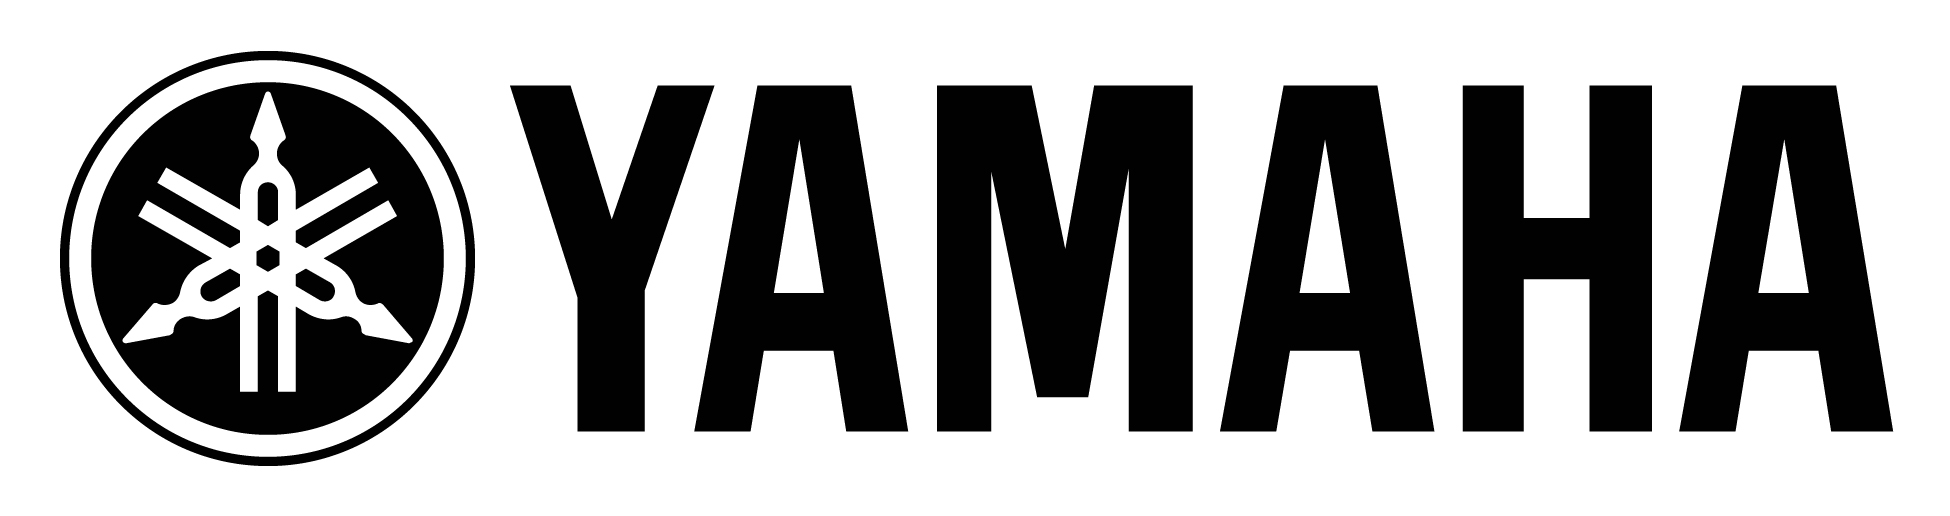 YAMAHA_logomark_2010_BLACK.jpg